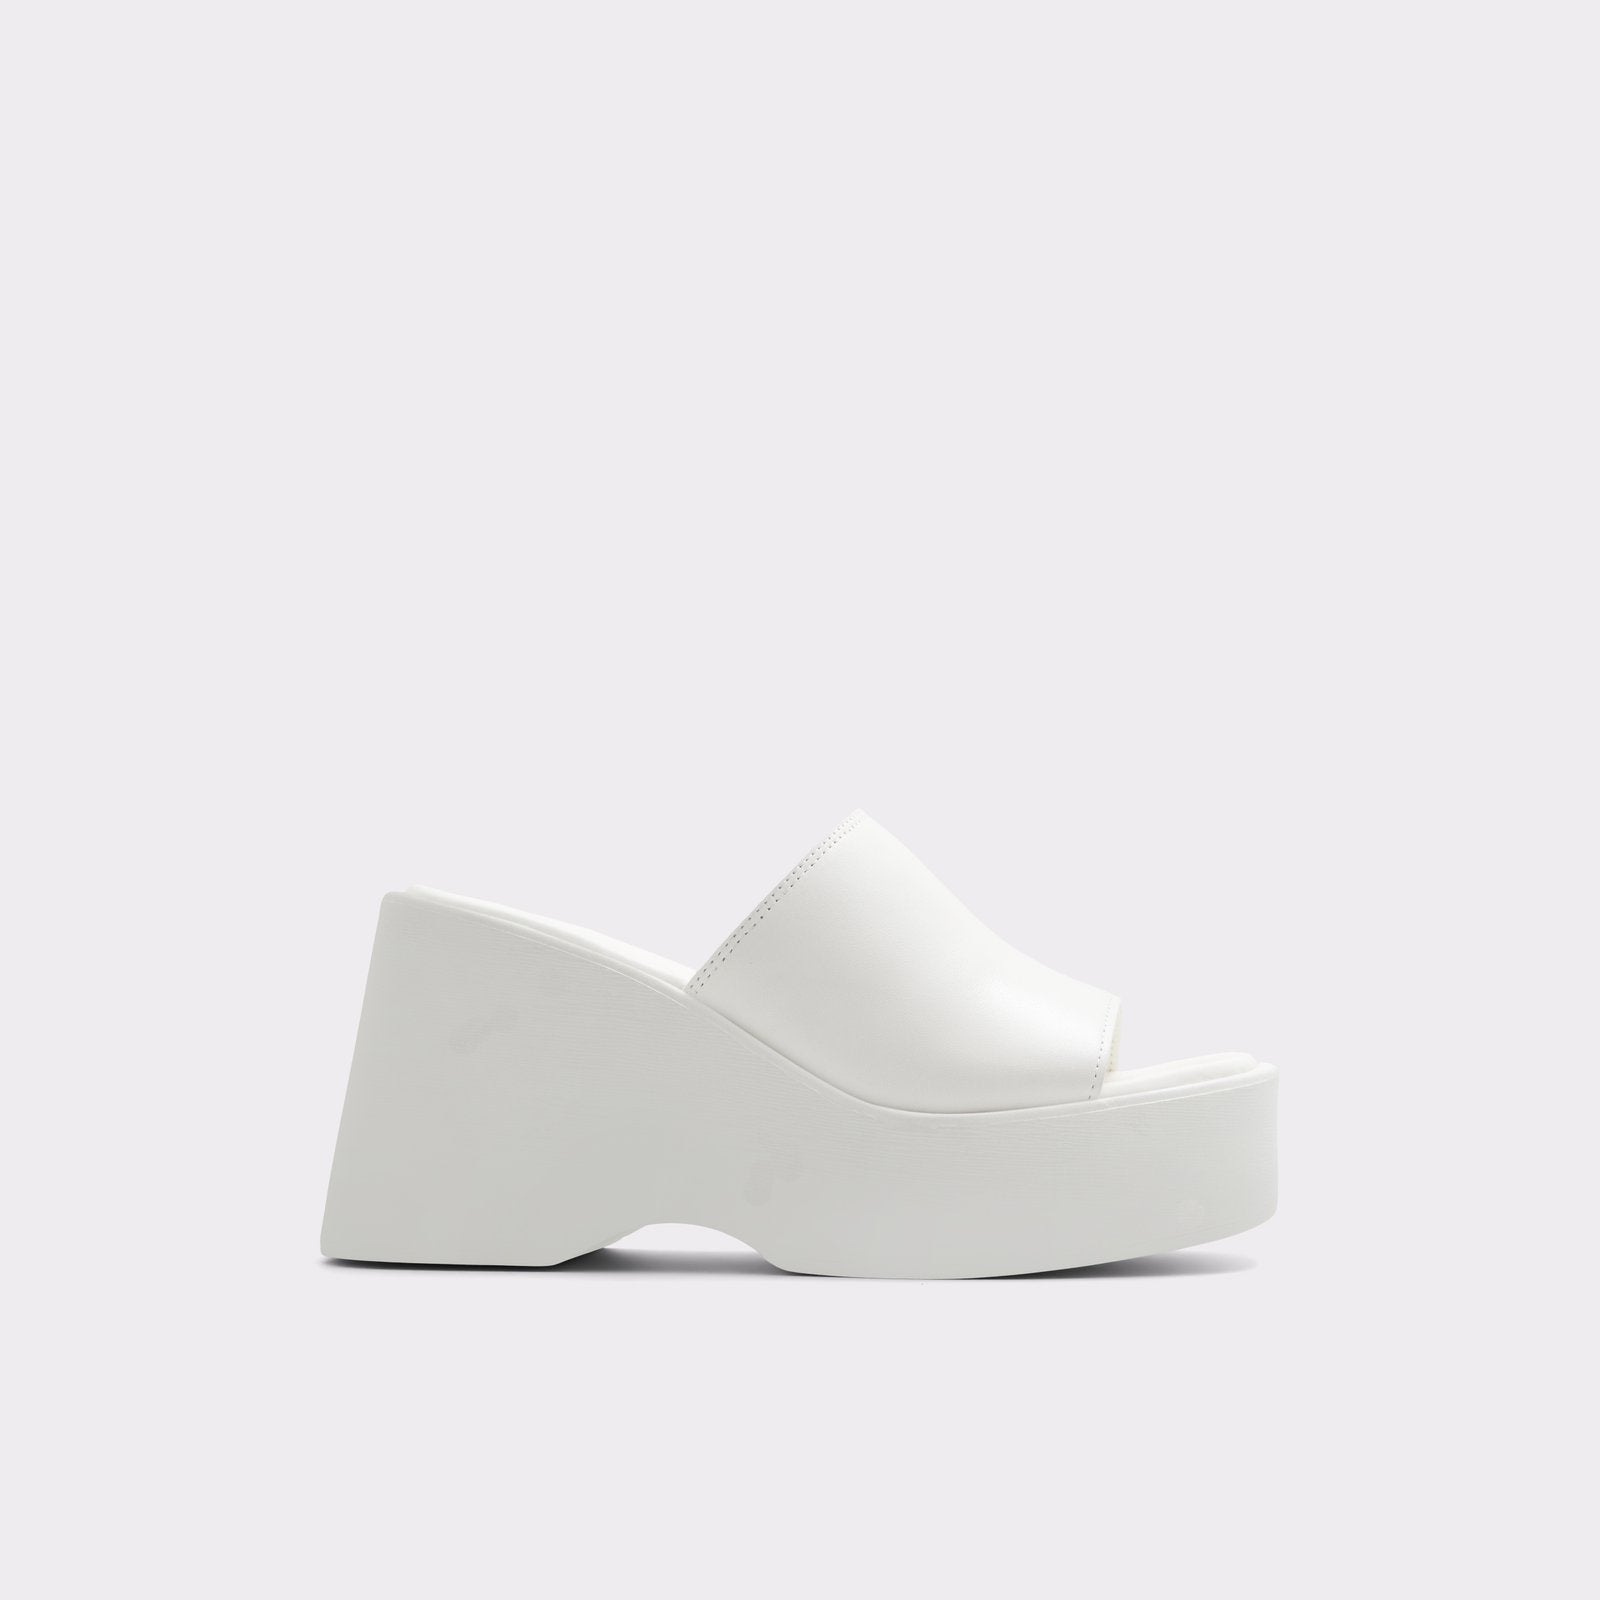 Aldo Women’s Sustainable Wedged Sandals Betta (White)